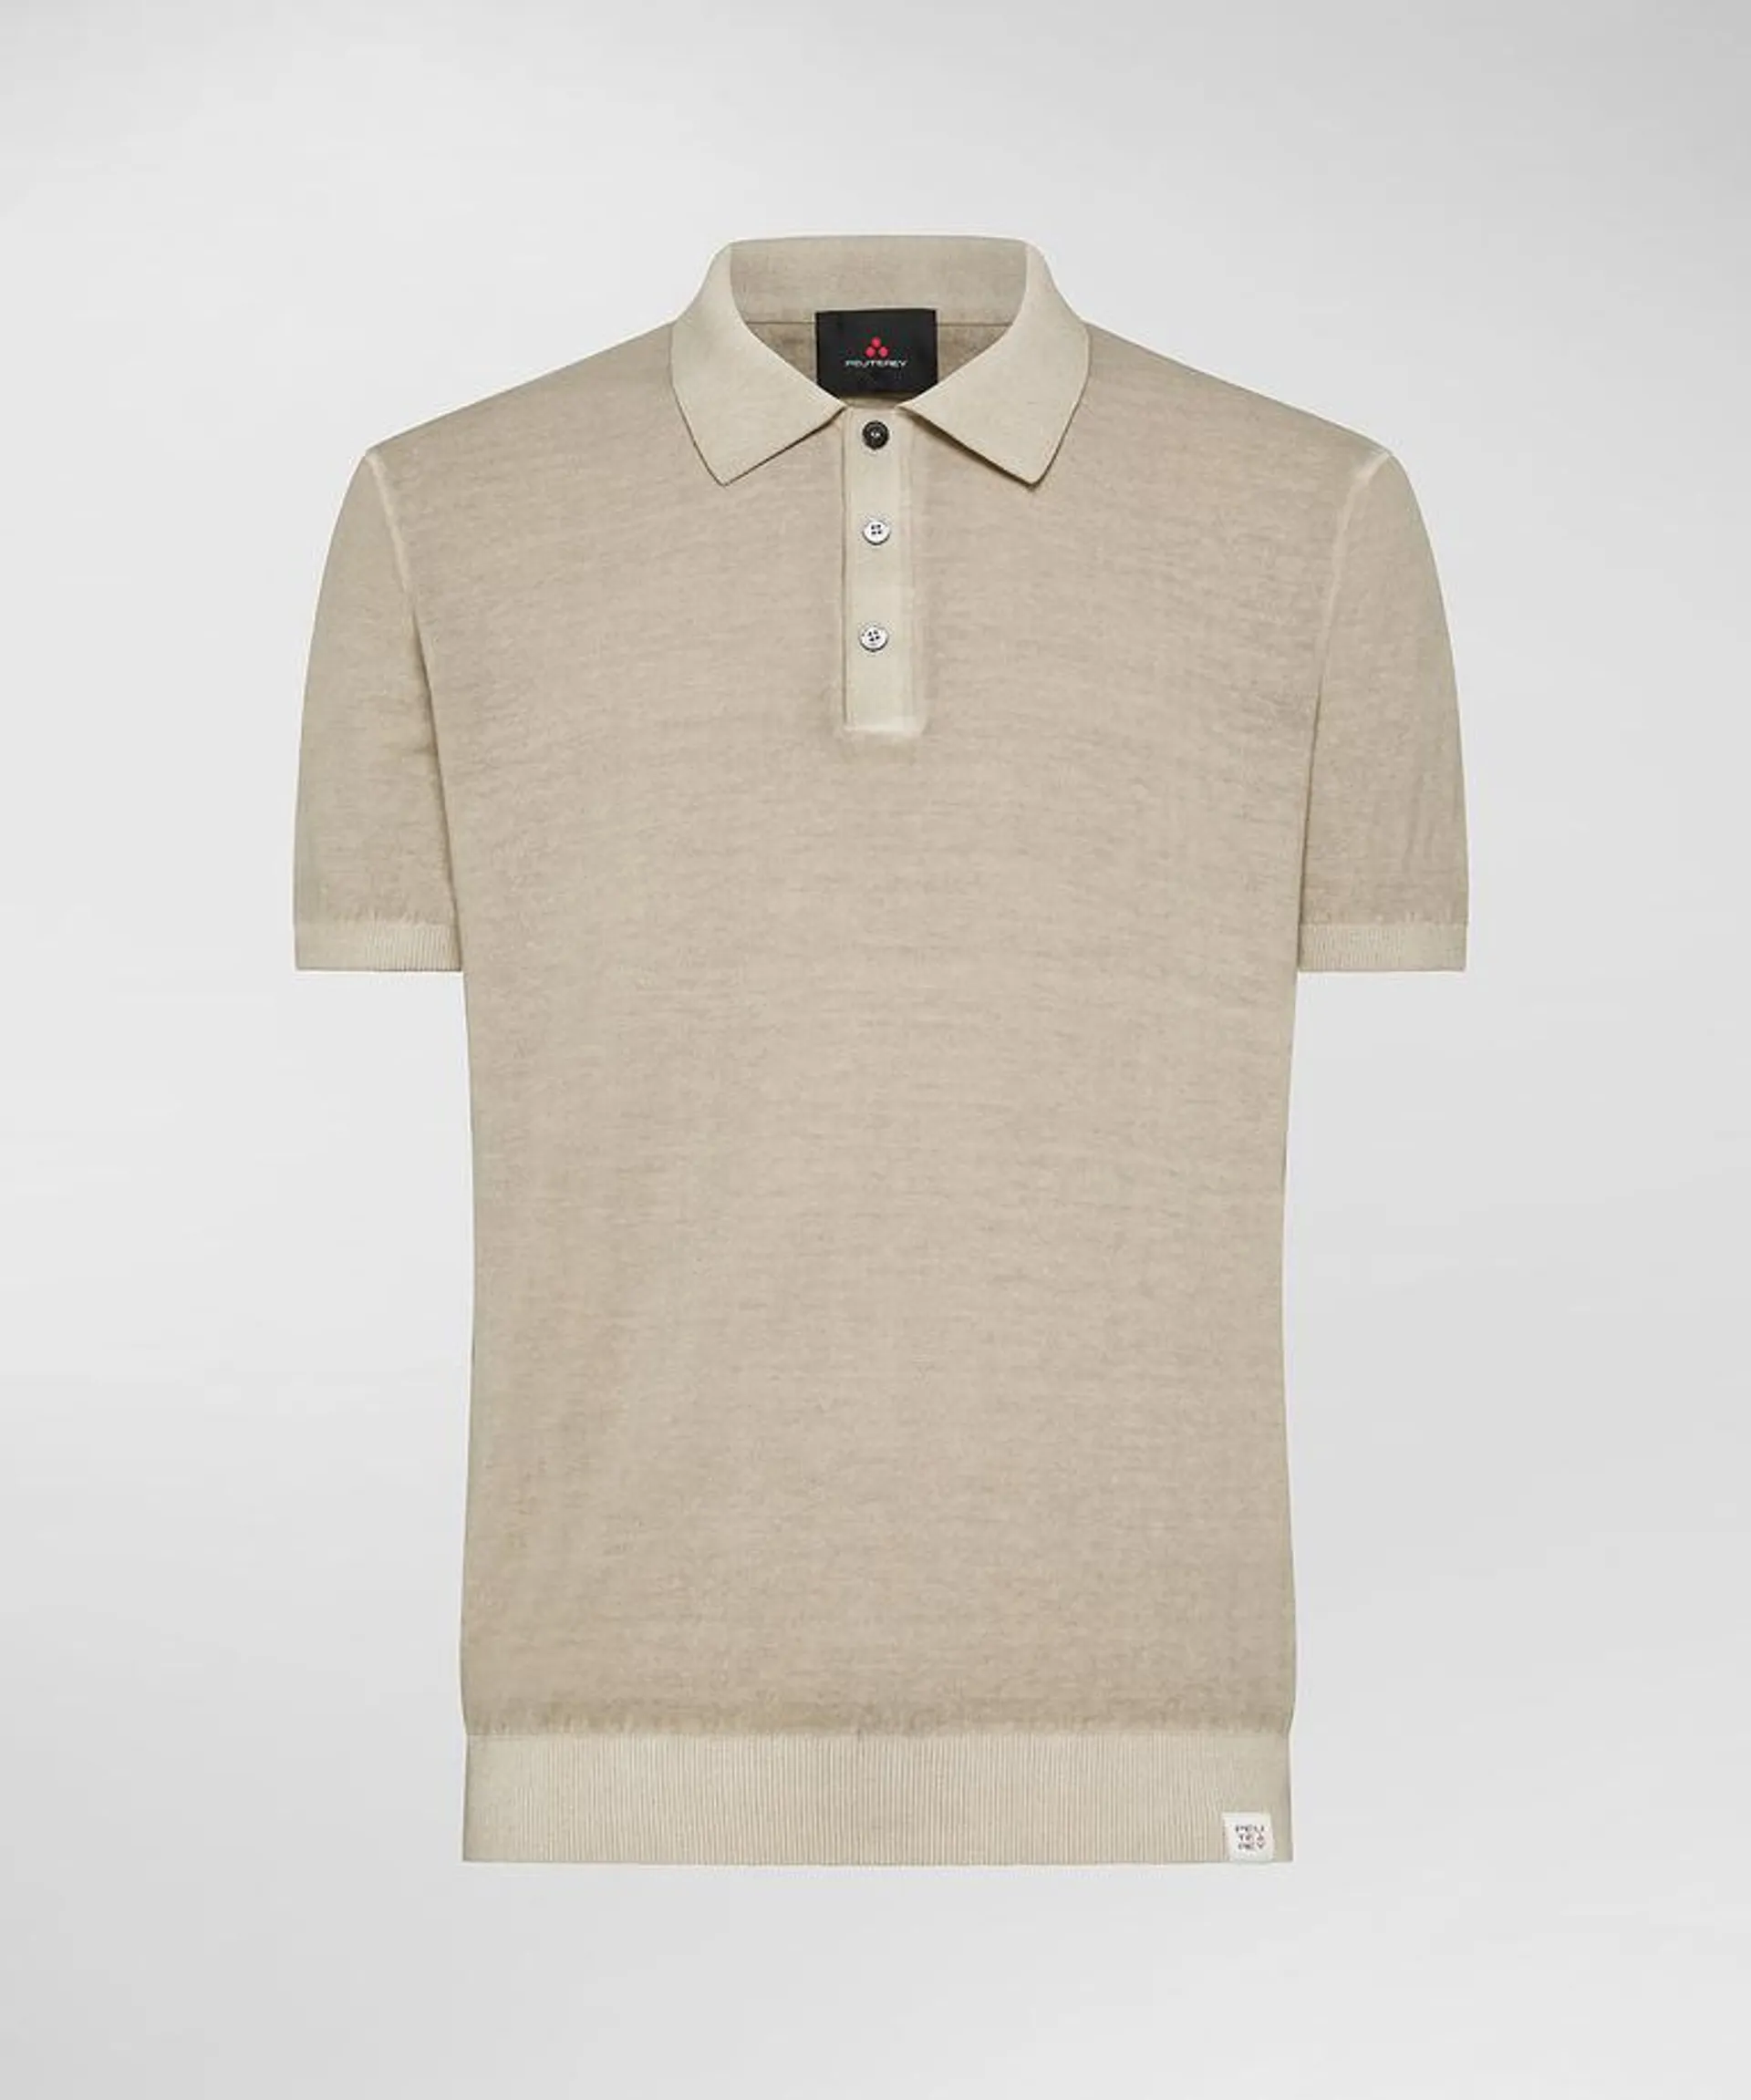 Cotton knit classic polo shirt